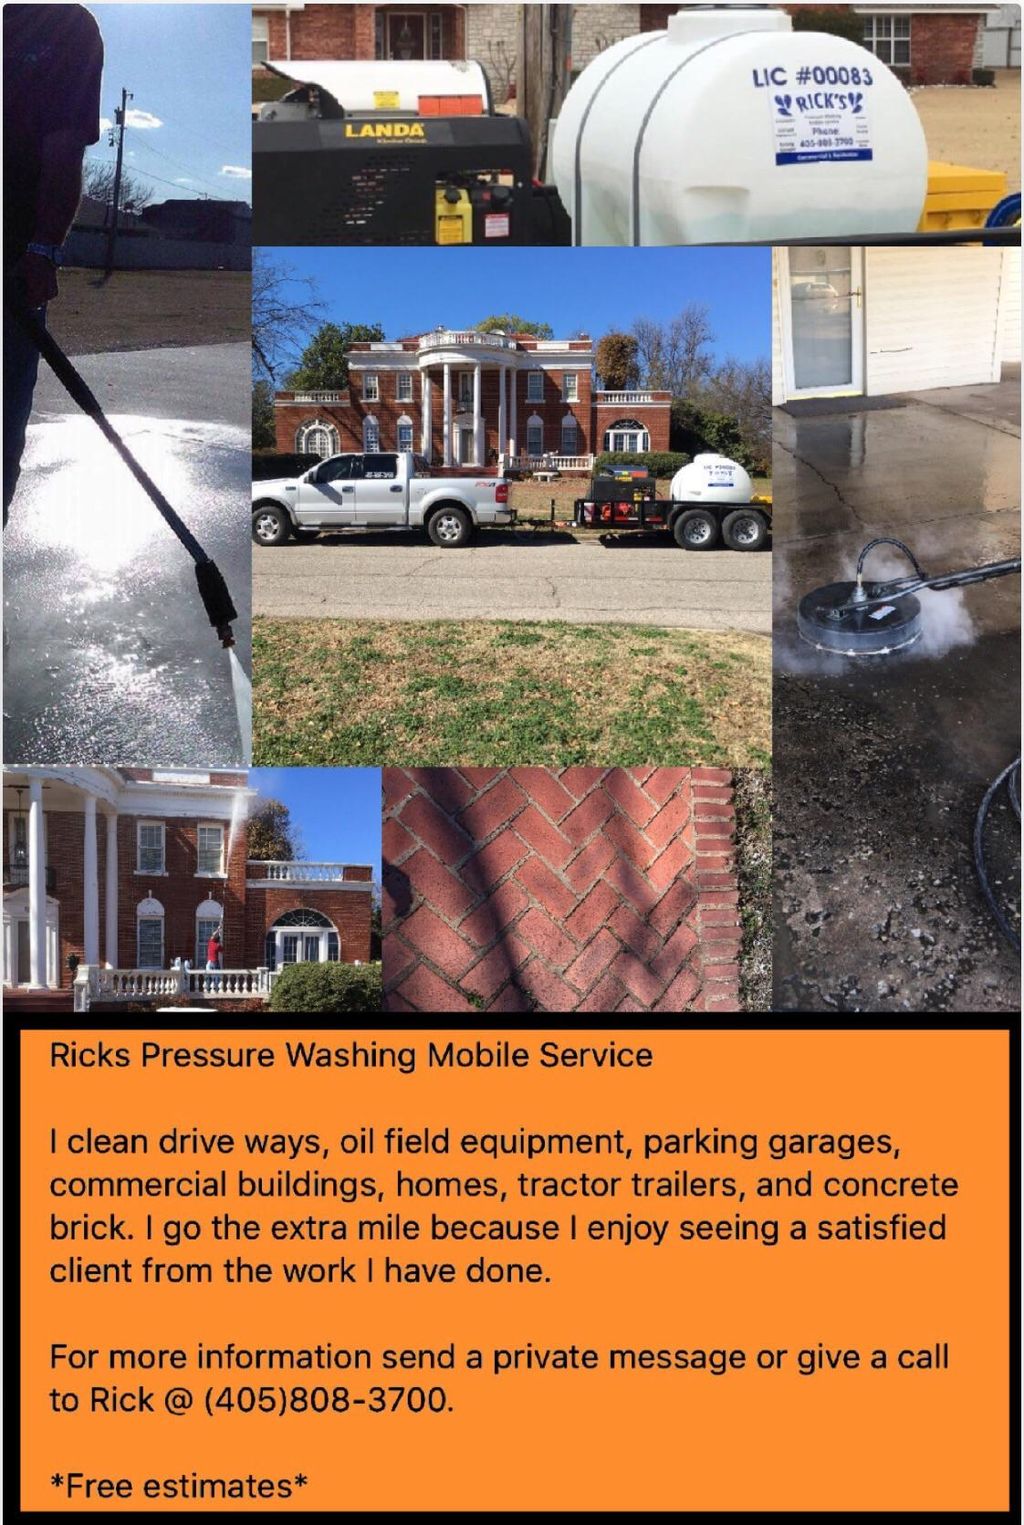 Rick's Pressure Washing Mobile Service